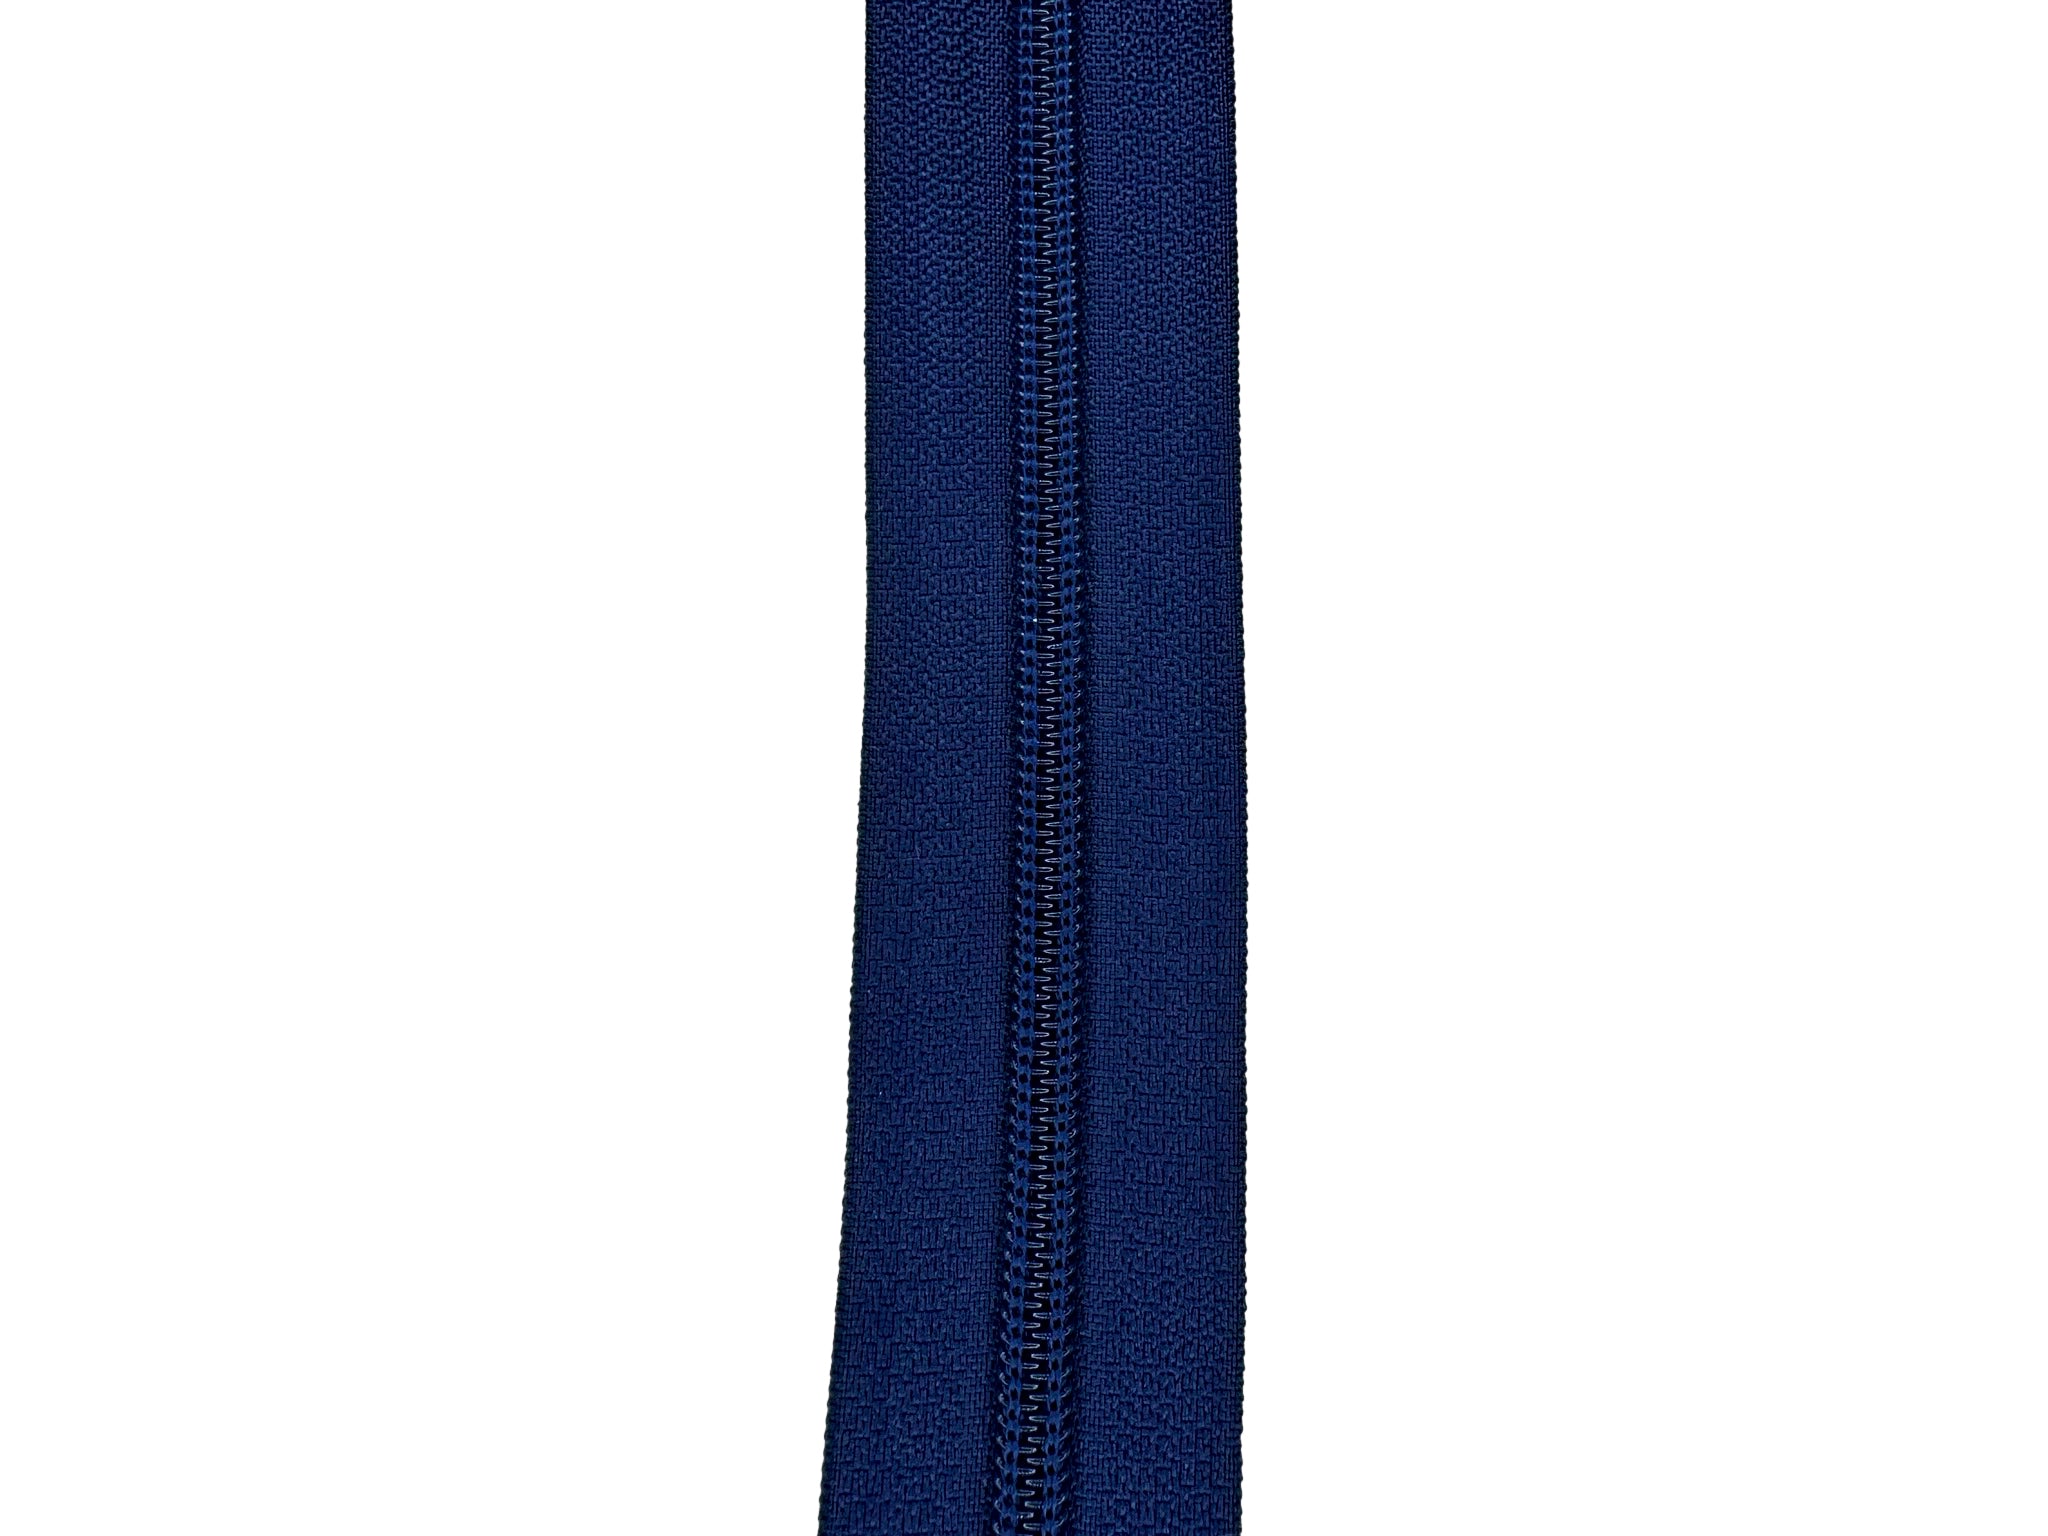 Zipper Repair Kit 5 Sliders With Pull 12 Pcs Zipper Stops